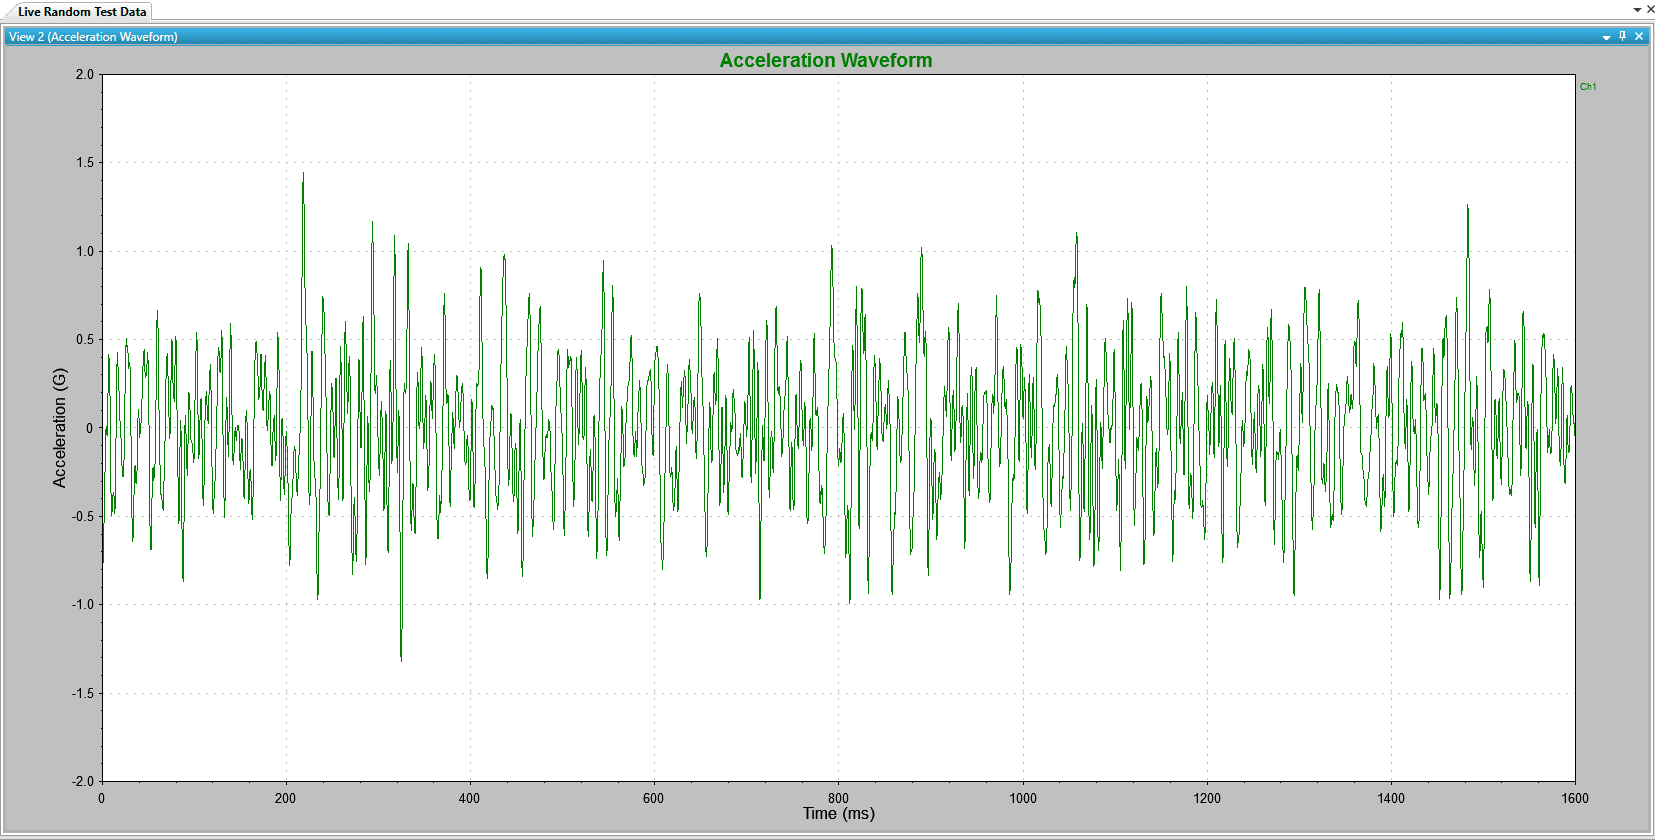 The acceleration waveform for a RANDOM vibration test